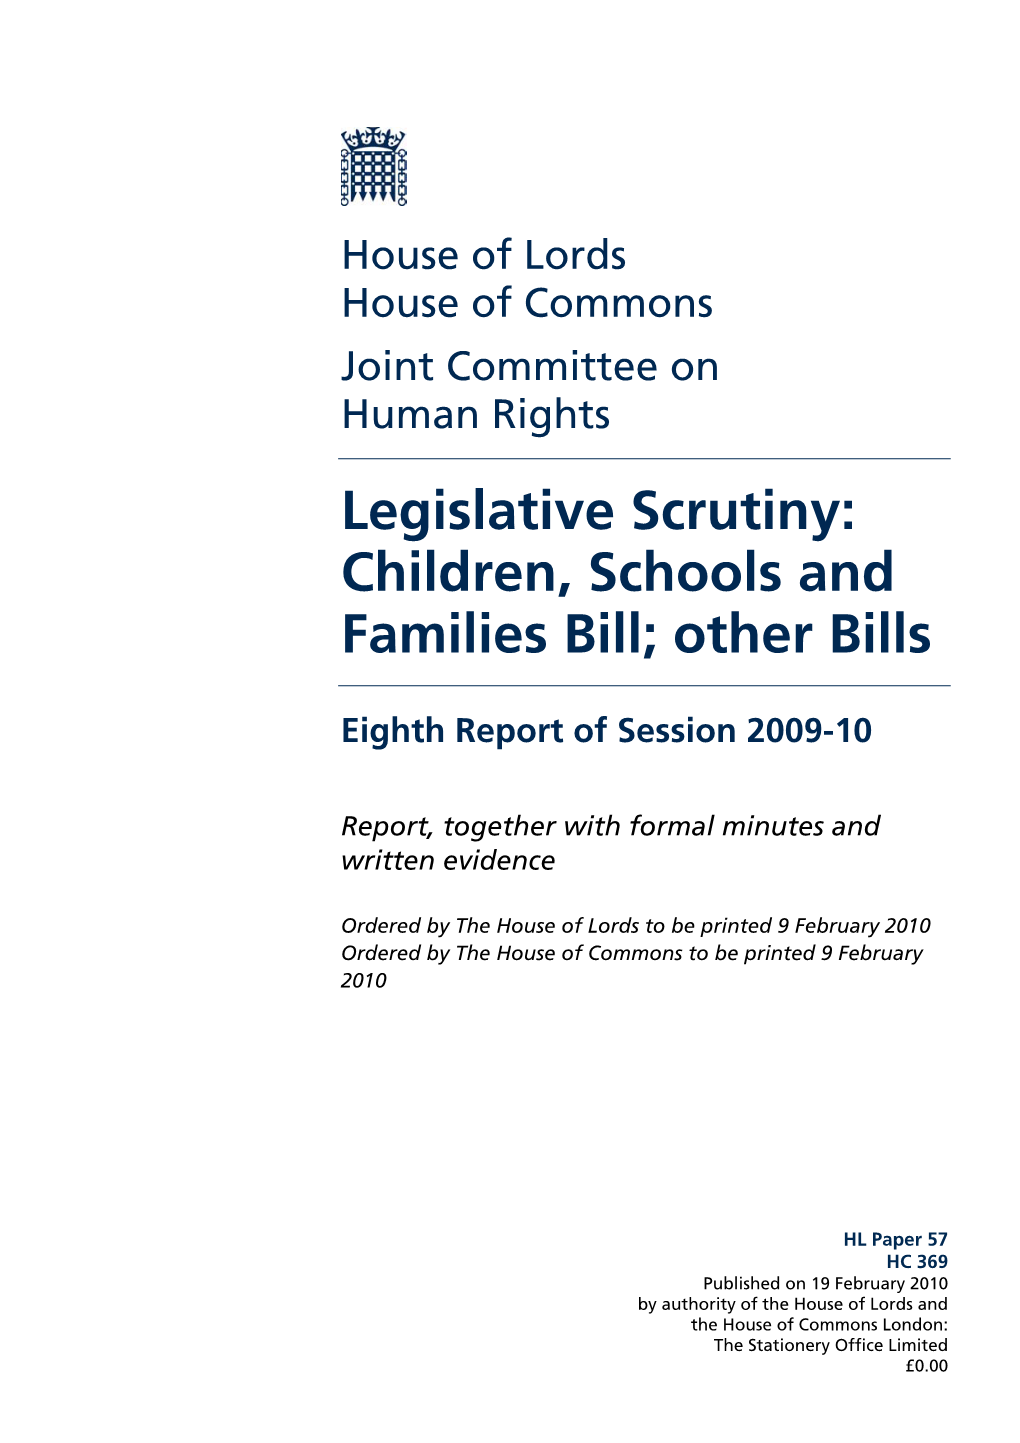 Legislative Scrutiny: Children, Schools and Families Bill; Other Bills